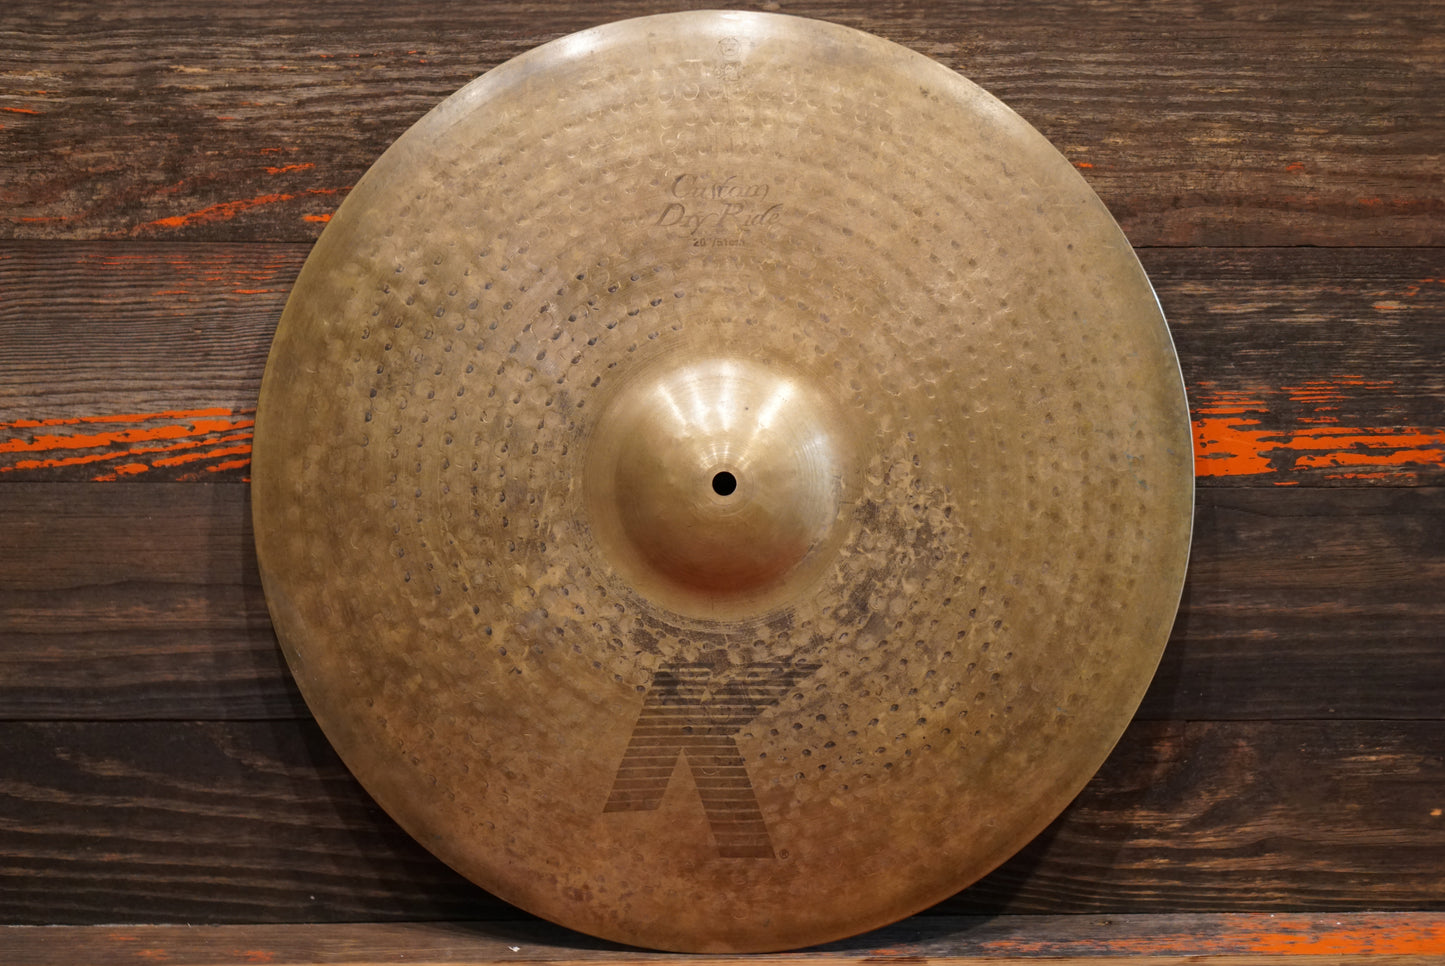 Zildjian 20" K. Custom Dry Ride Cymbal - 2900g